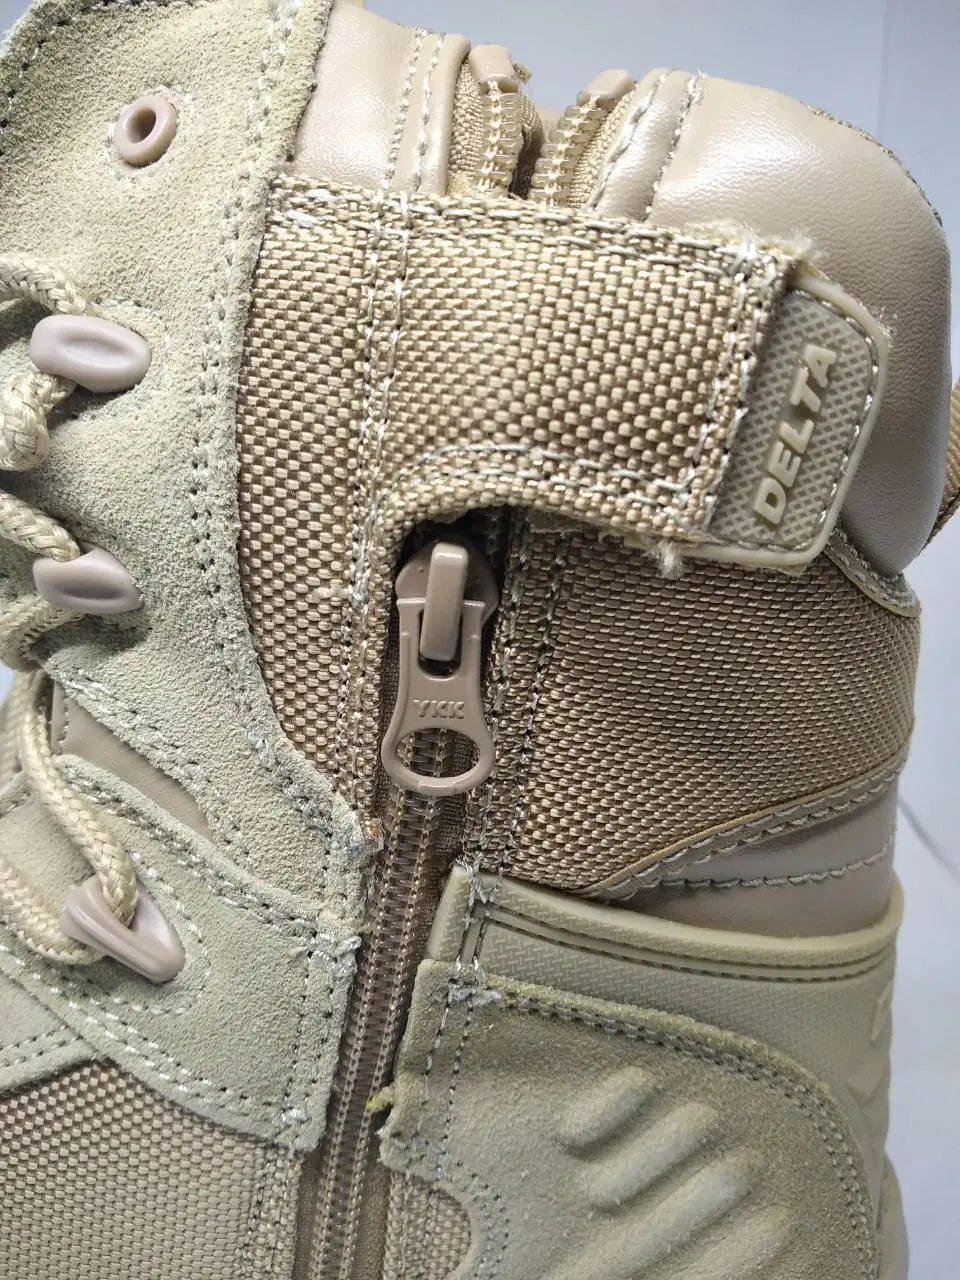 Delta Army Tactical Long Shoes - Sneak Kicks